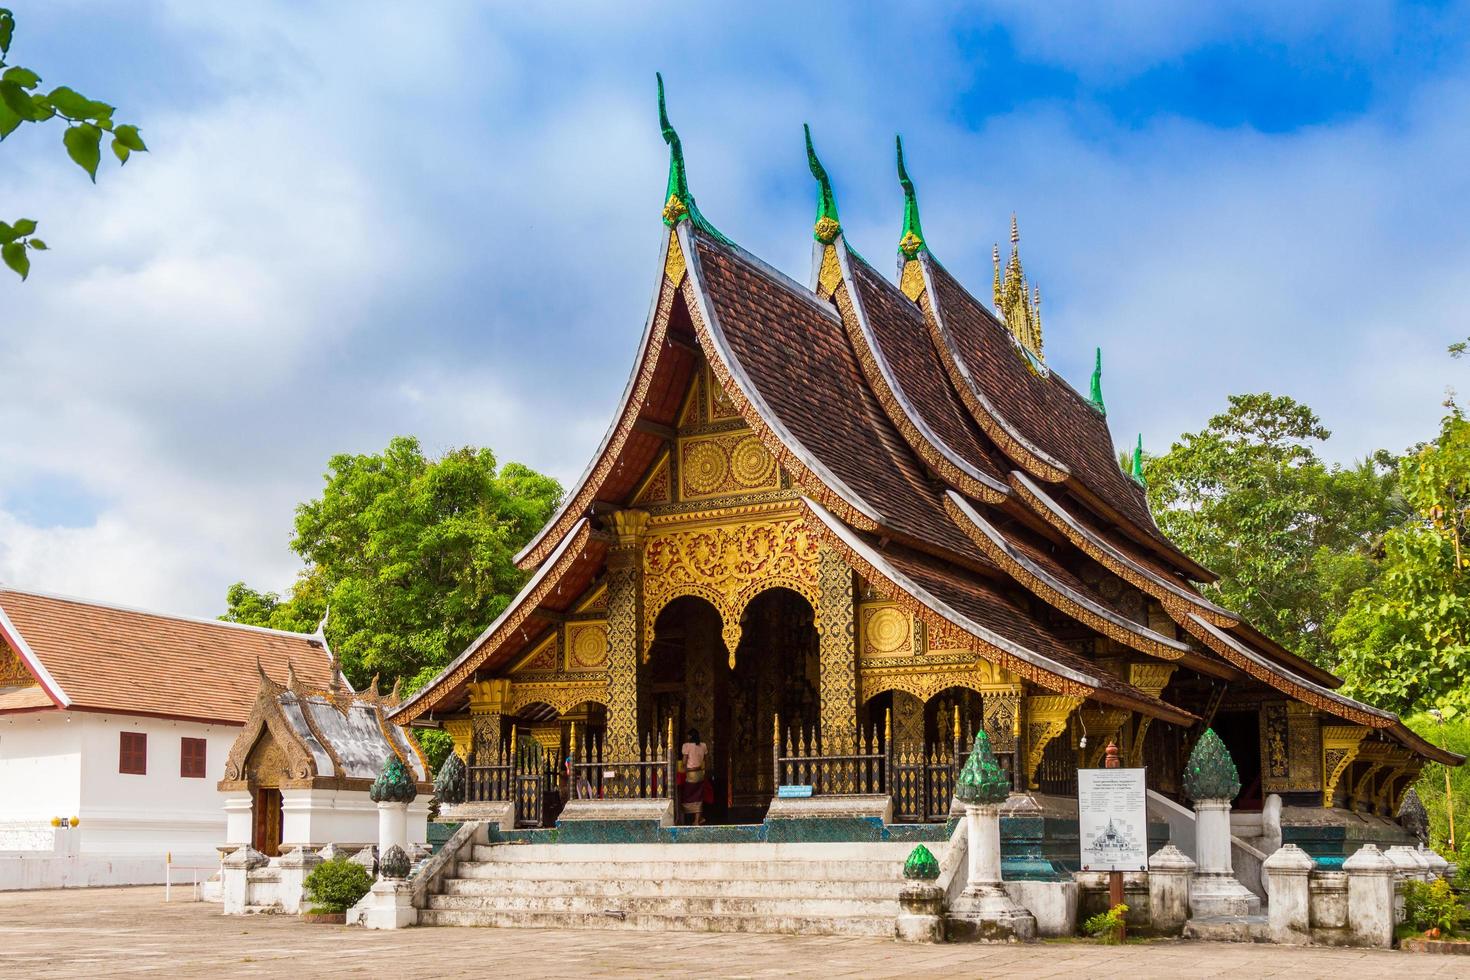 Wat xieng thong temple in luang prabang, laos. photo